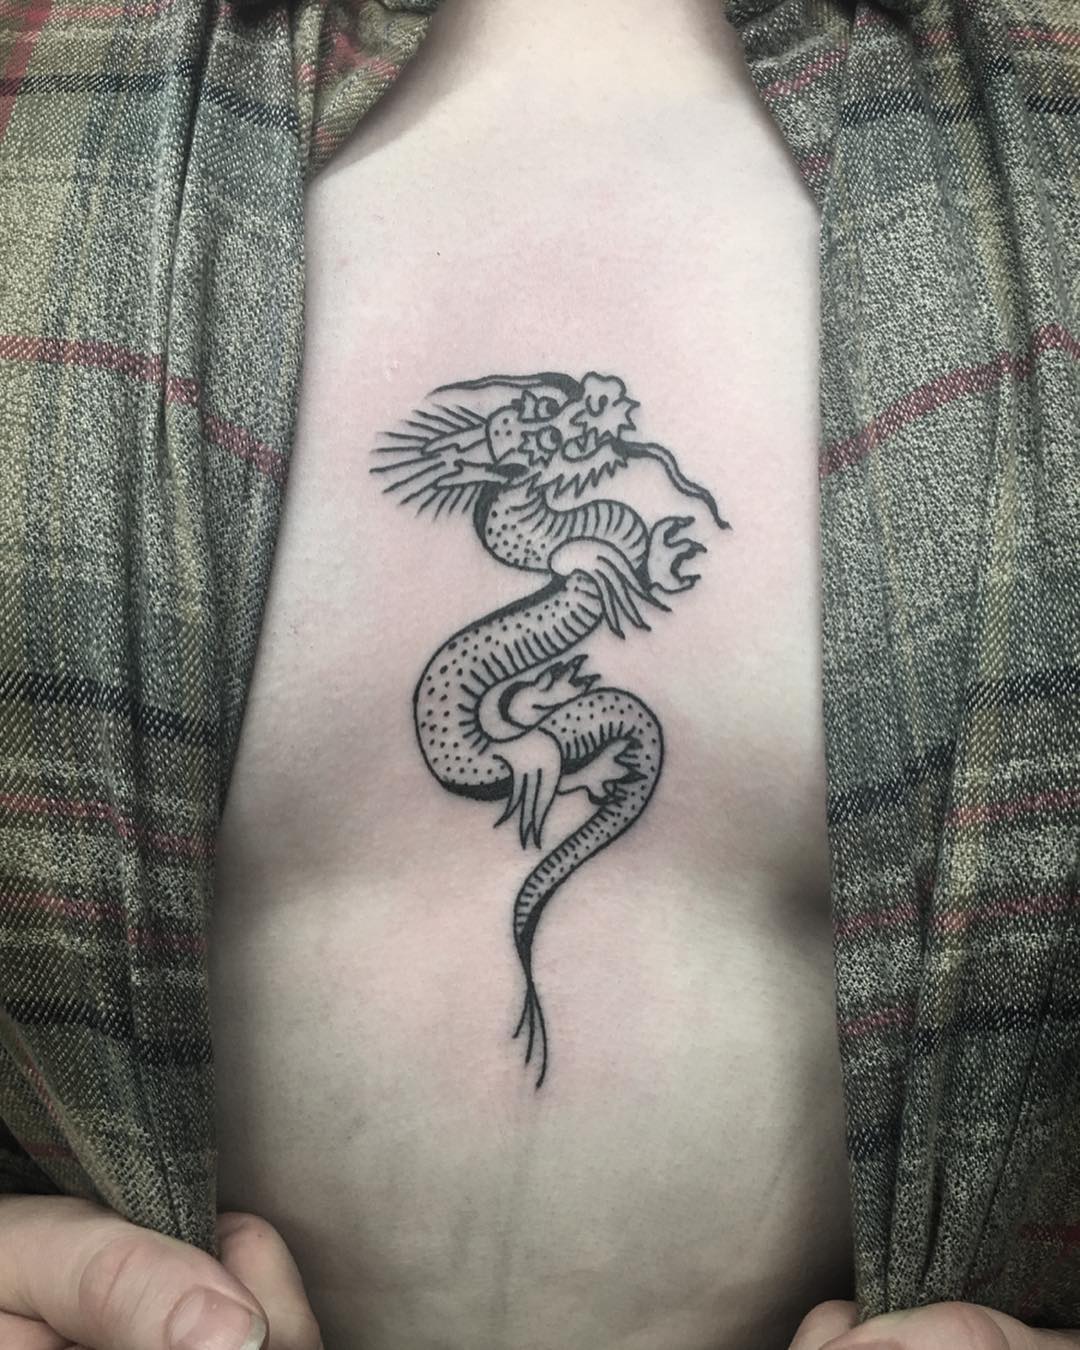 Tatuaje de esternón de pequeño dragón.